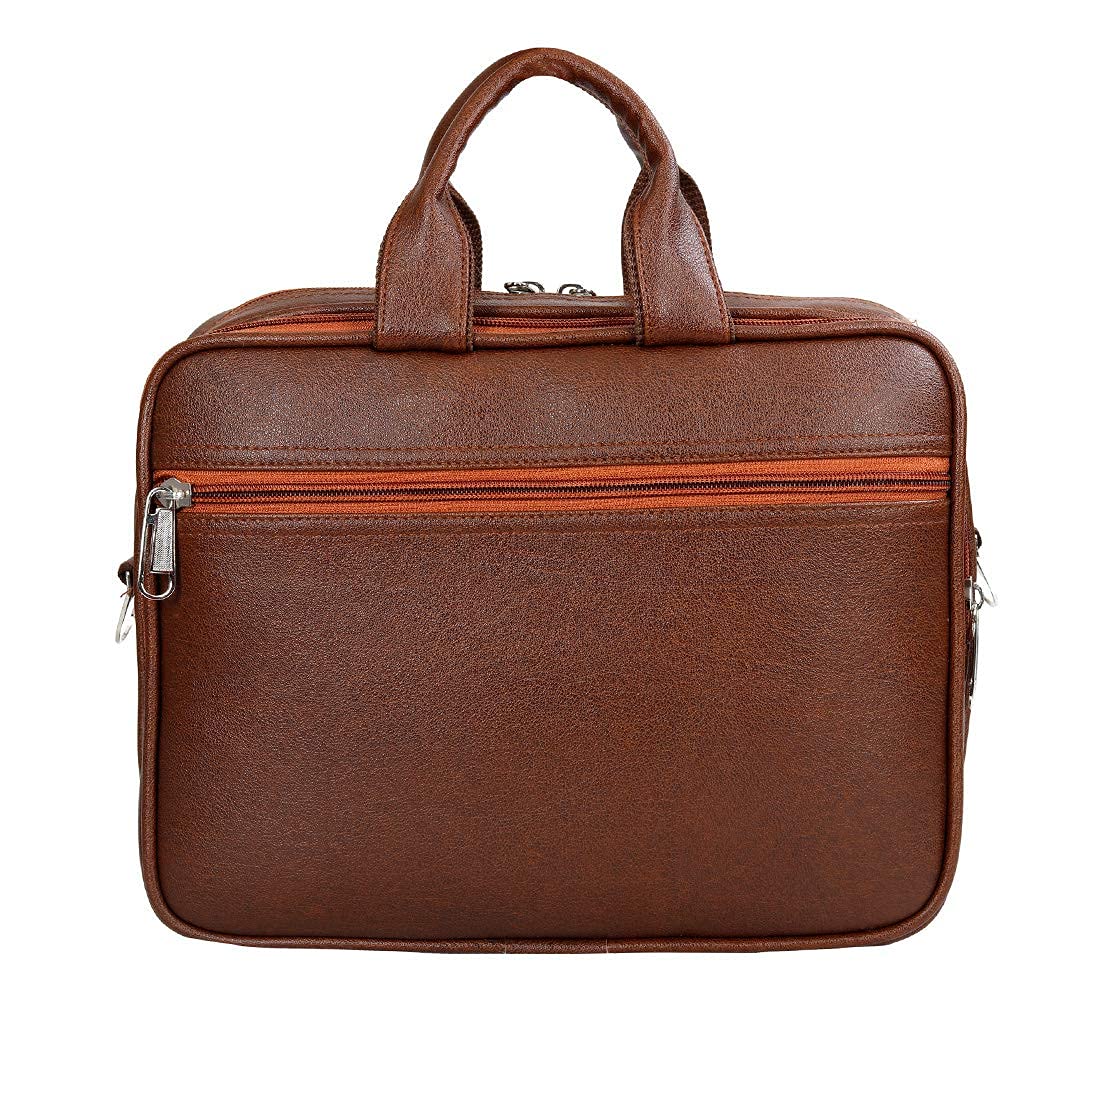 Leather World Pu Leather Mini 14 inch Laptop Office Bag | Office Bag | Messenger Bag | Travel Bag